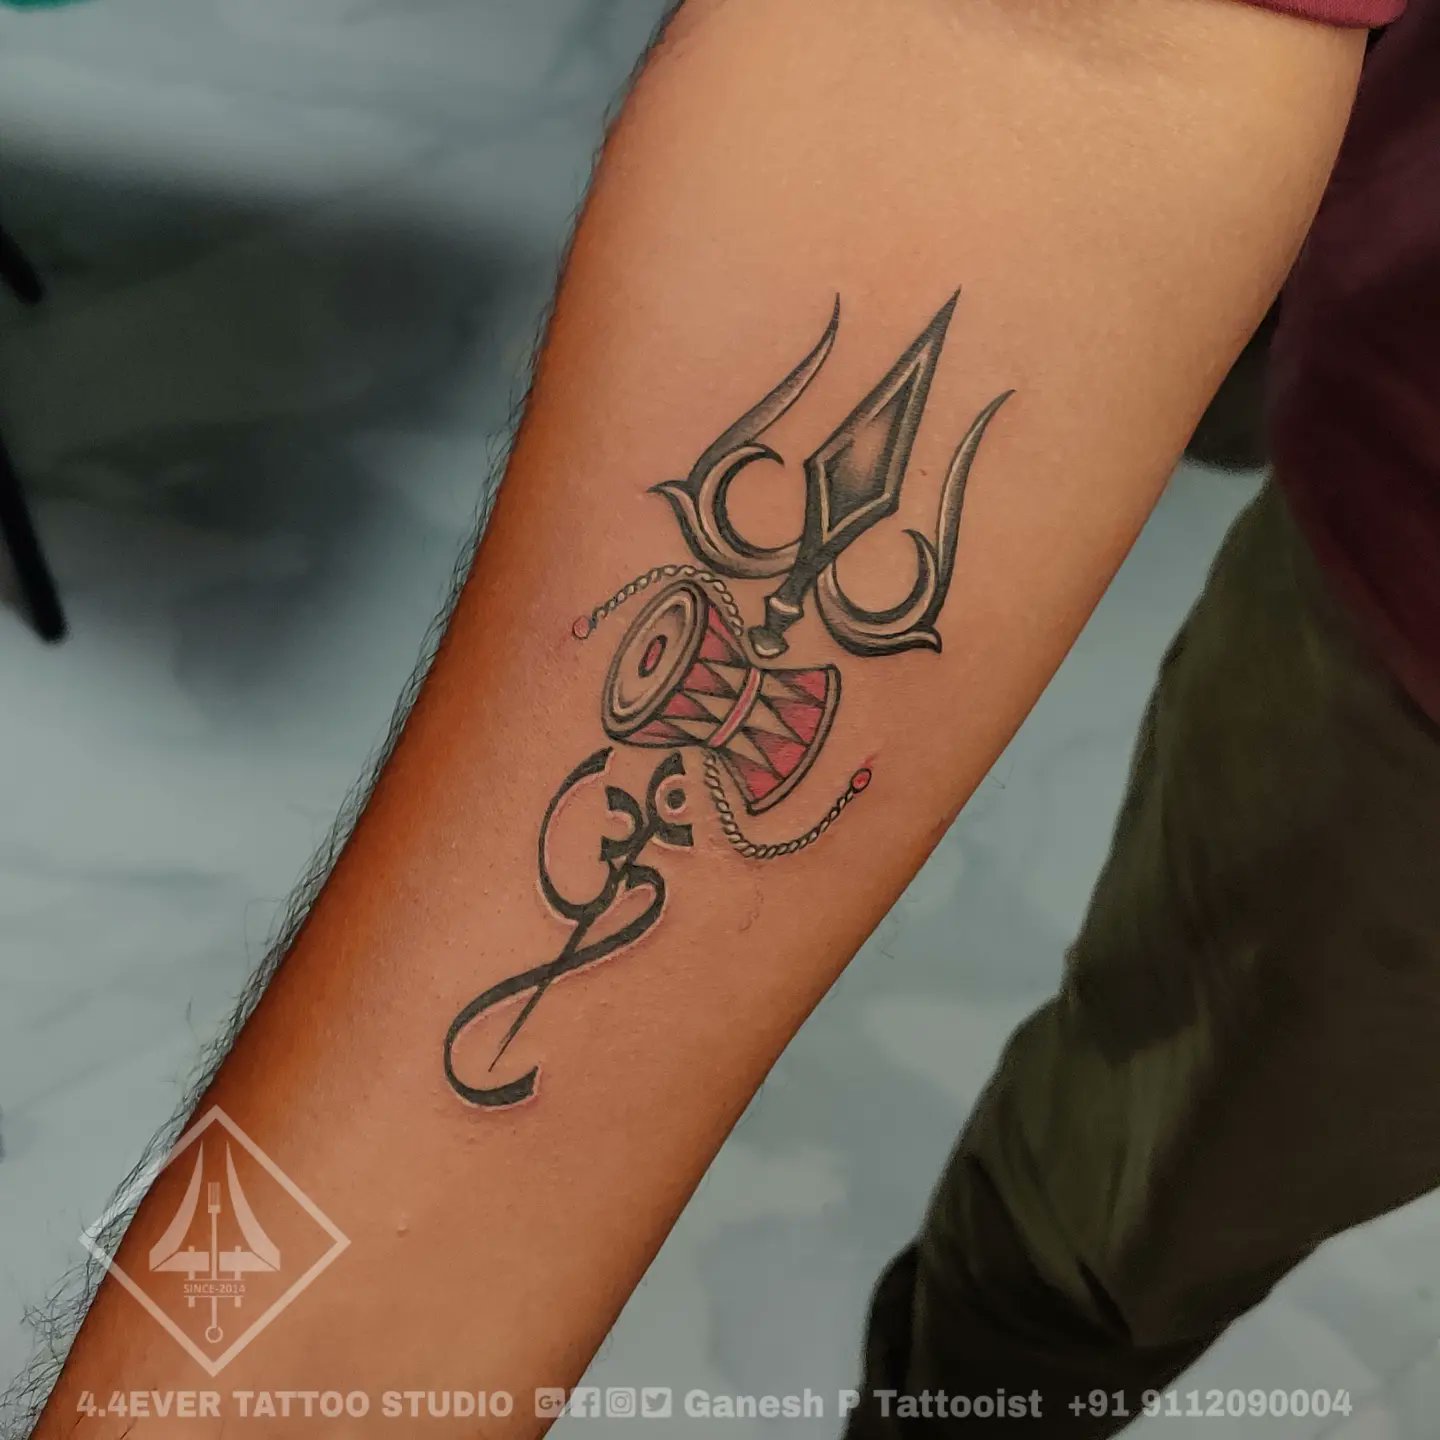 om with trishul om with ganesh  trishultrishul with ganesh  ganesh with  om ravi chauhan ink need tattoo  Tattoos Simple tattoo designs Om  tattoo